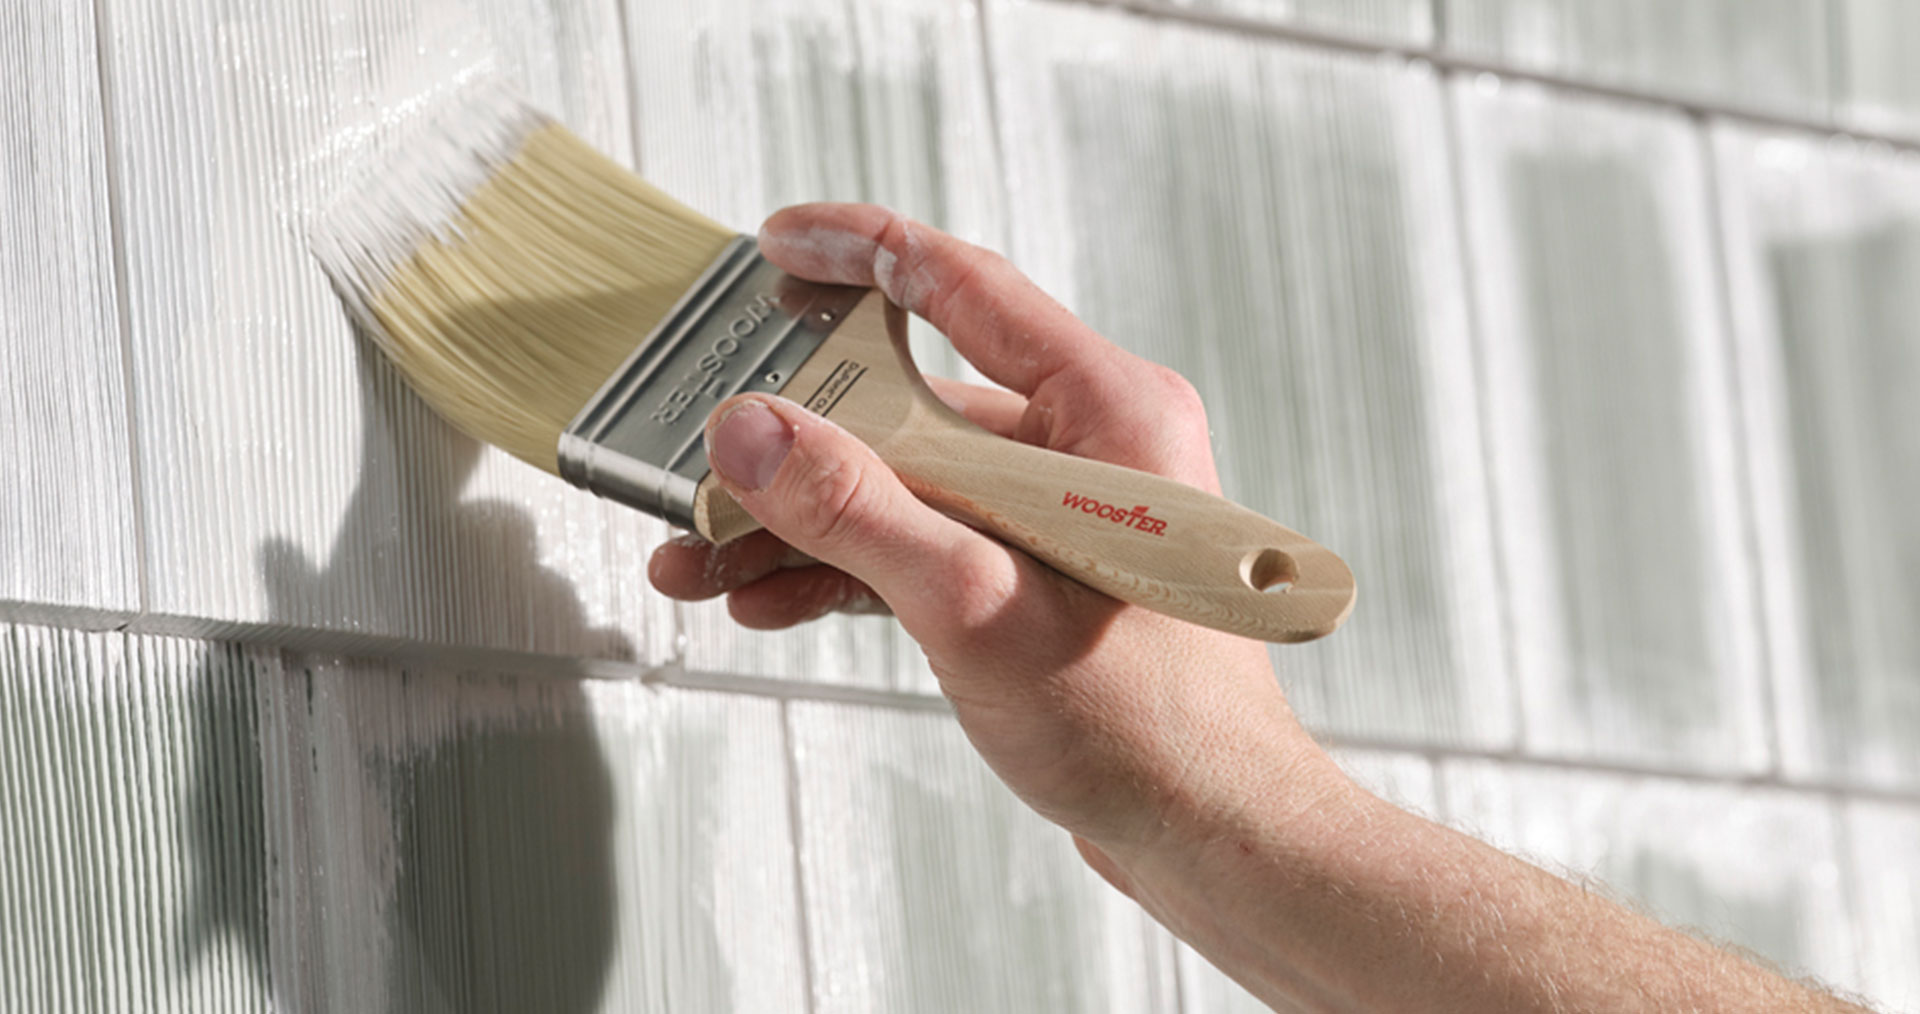 Wooster Brush Company - Paint Applicators & Tools